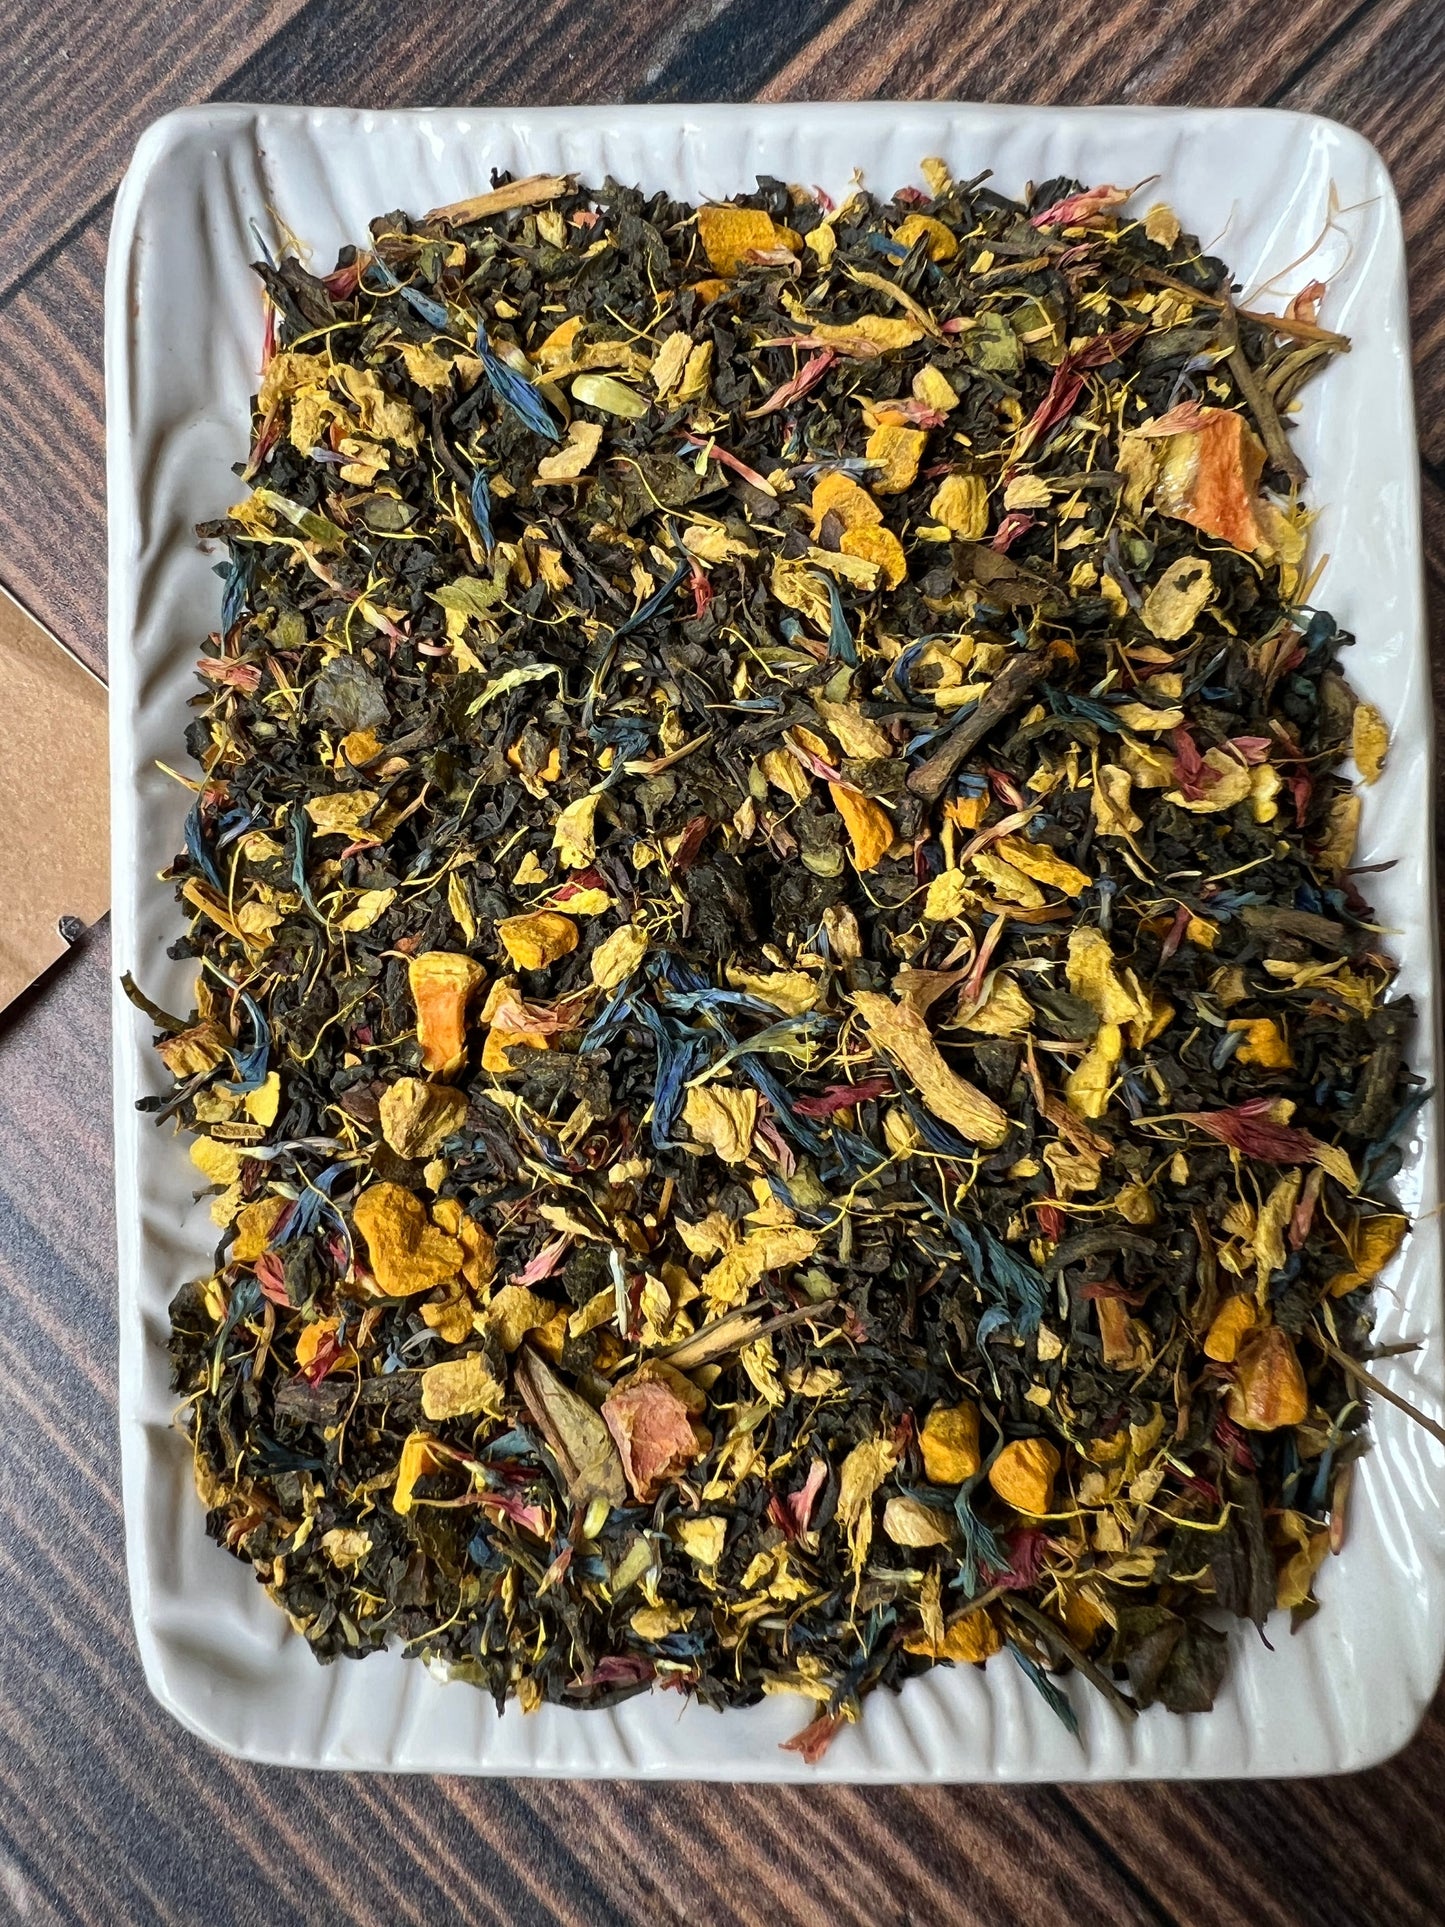 Turmeric Ginger Loose Leaf Tea - Superfood Blend, Spicy Black and Green Tea Blend